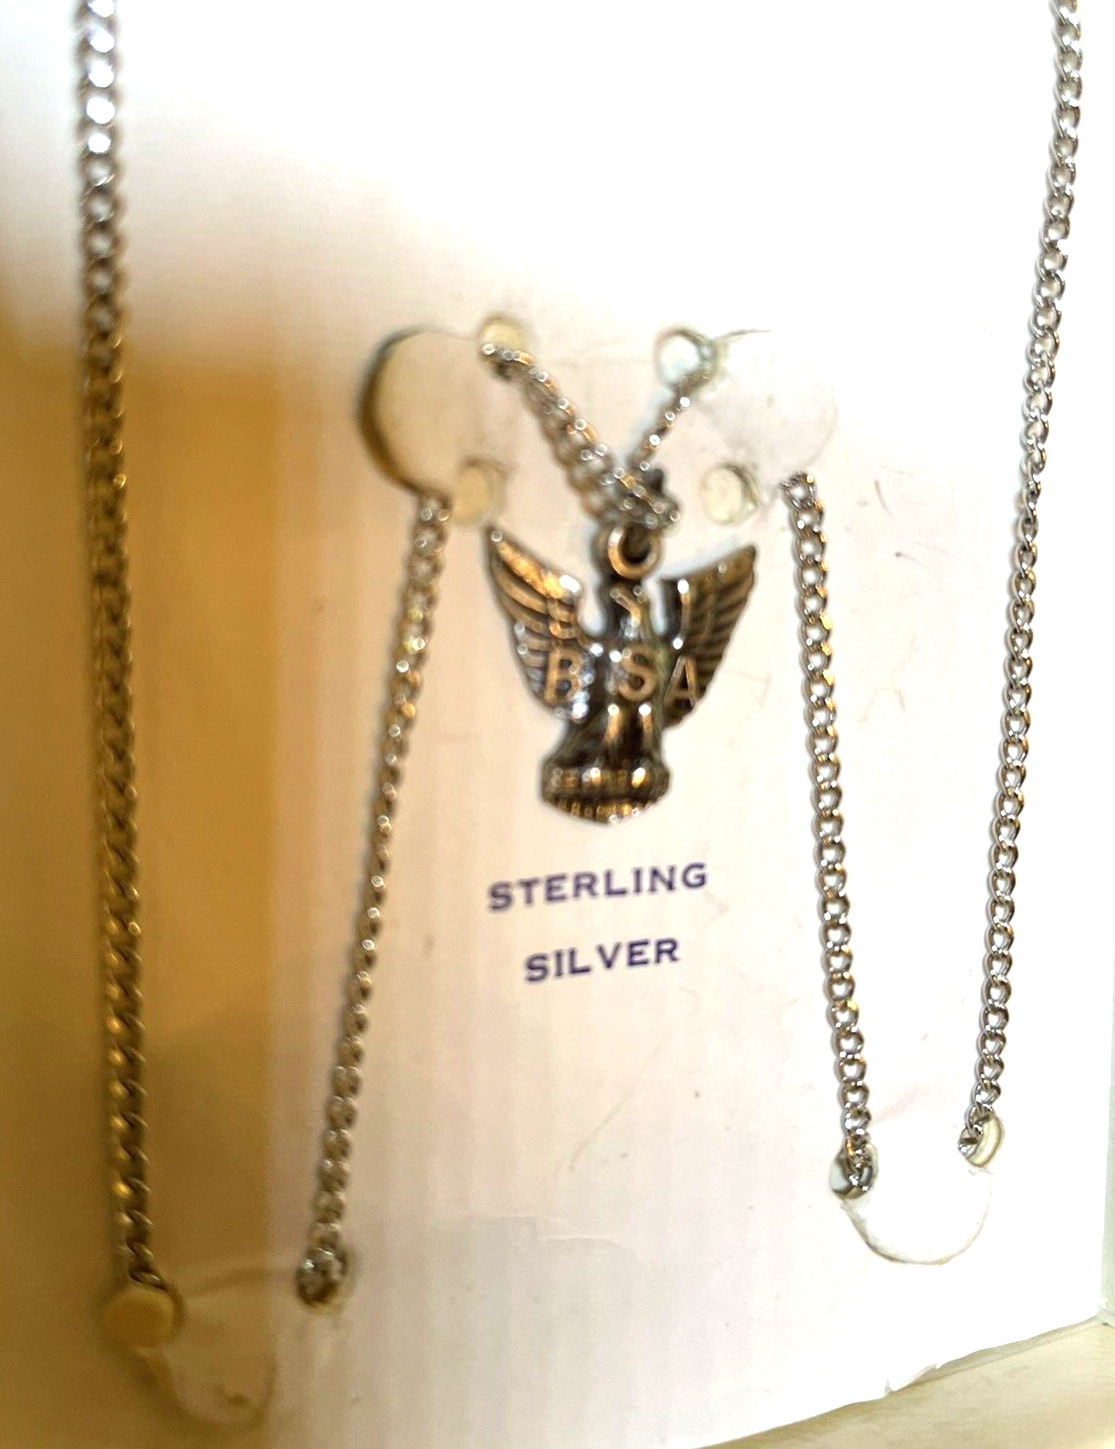 BSA EAGLE BOY SCOUT Sterling Silver STANGE Necklace Medal Pendant Charm ORIG BOX